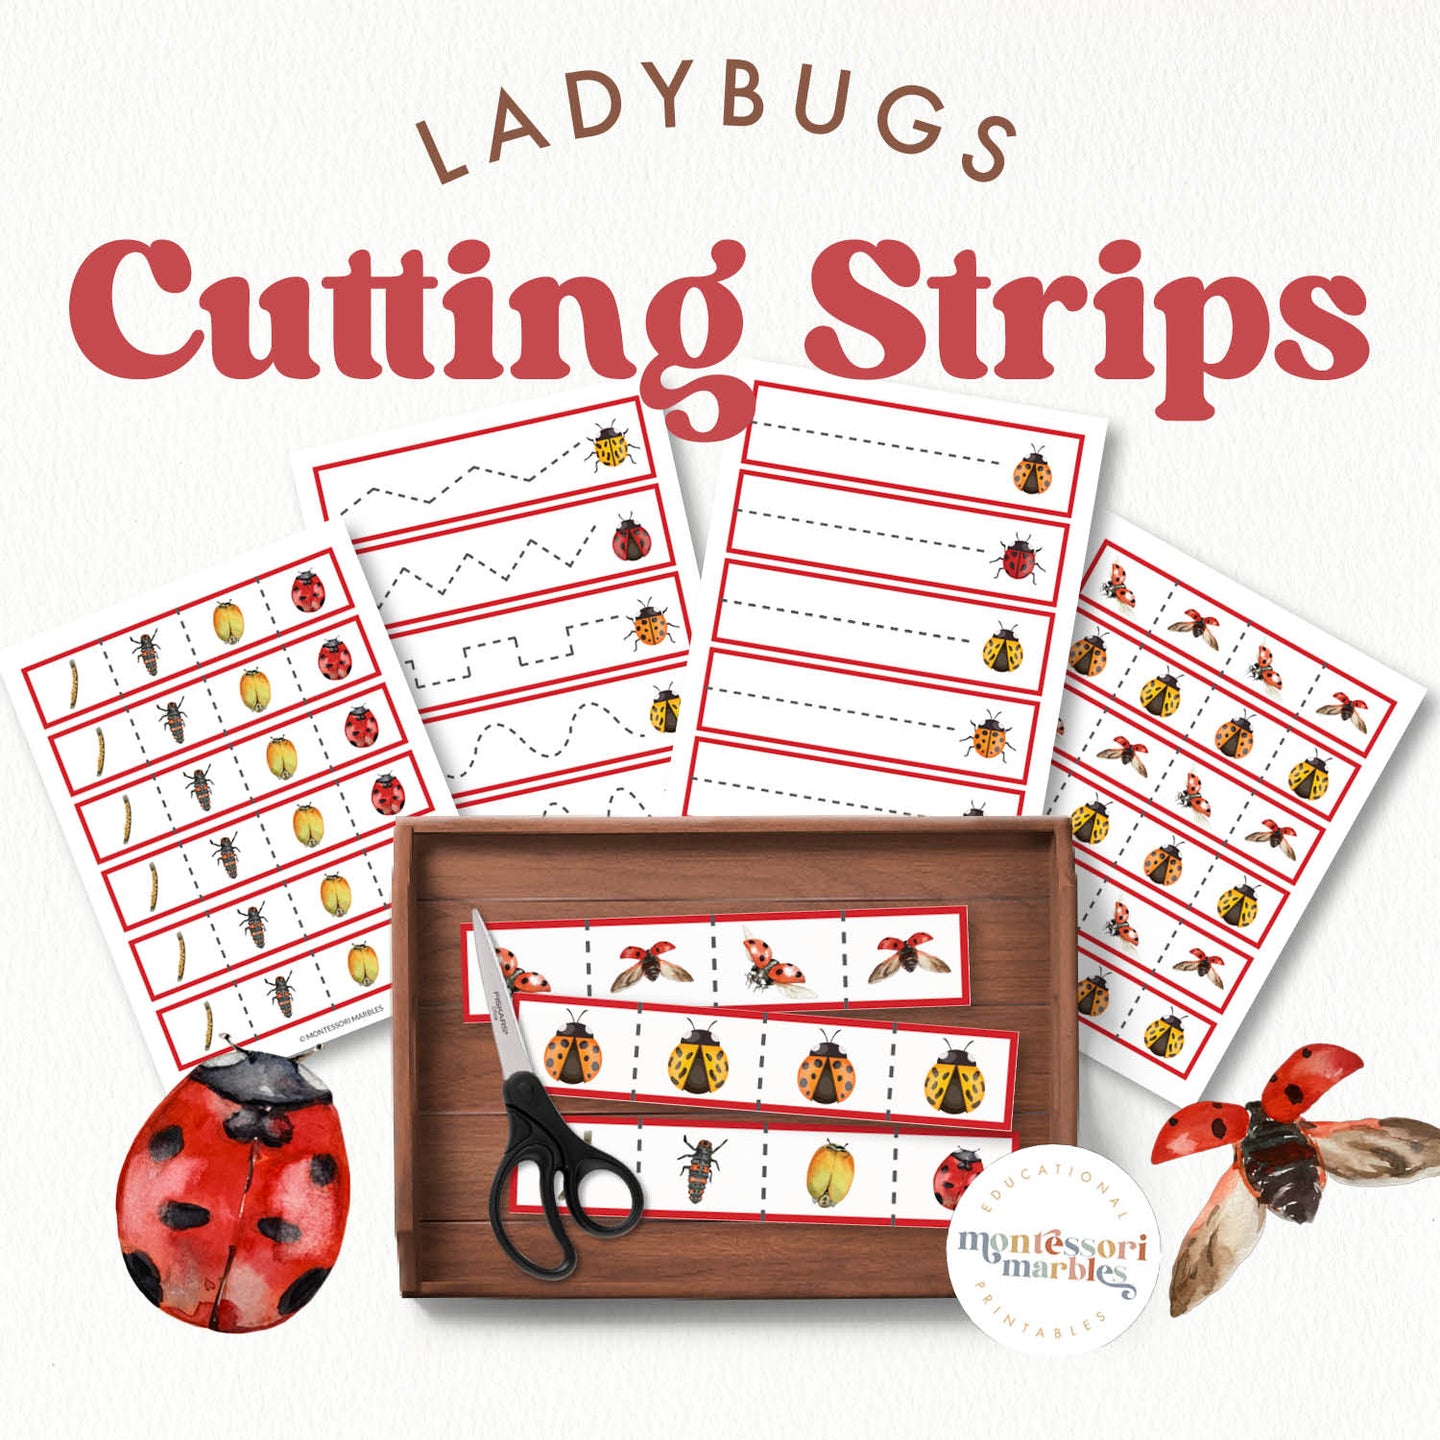 Ladybug Cutting Strips